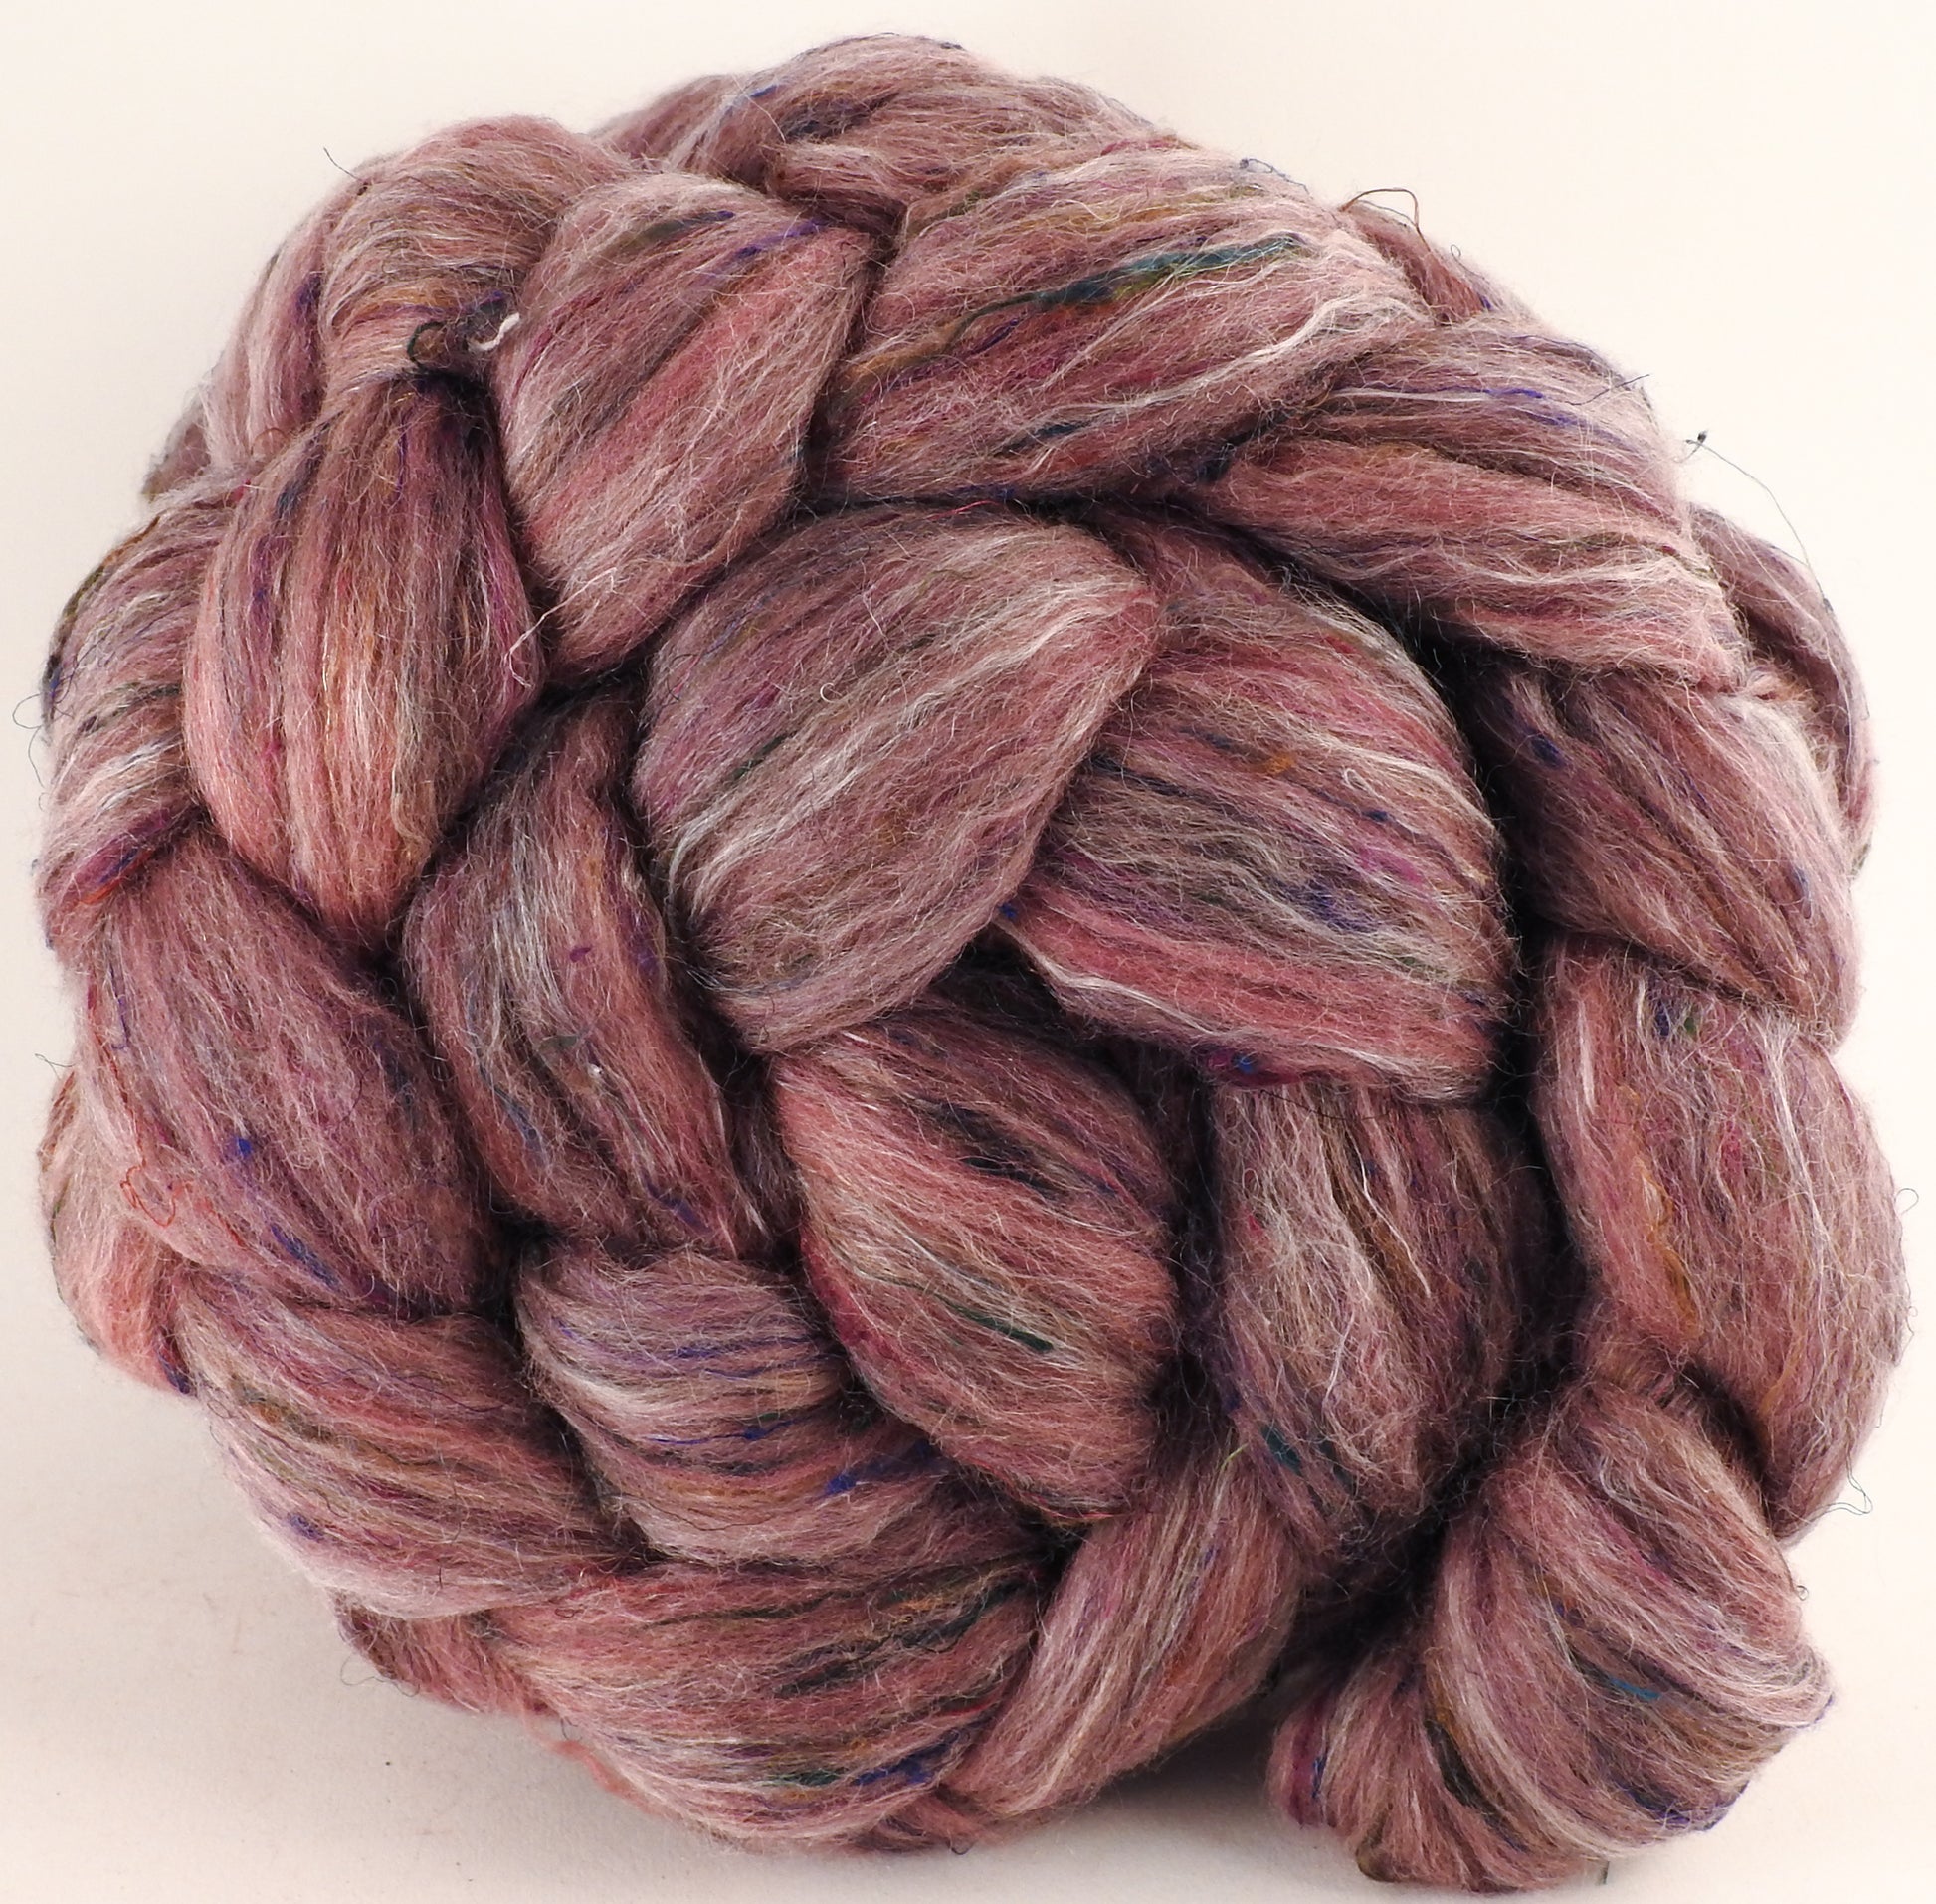 Batt in a Braid #46 - Cochineal (5.1 oz) - Rambouillet/ Corriedale / Ramie/Sari Silk (25/25/25/25) - Inglenook Fibers